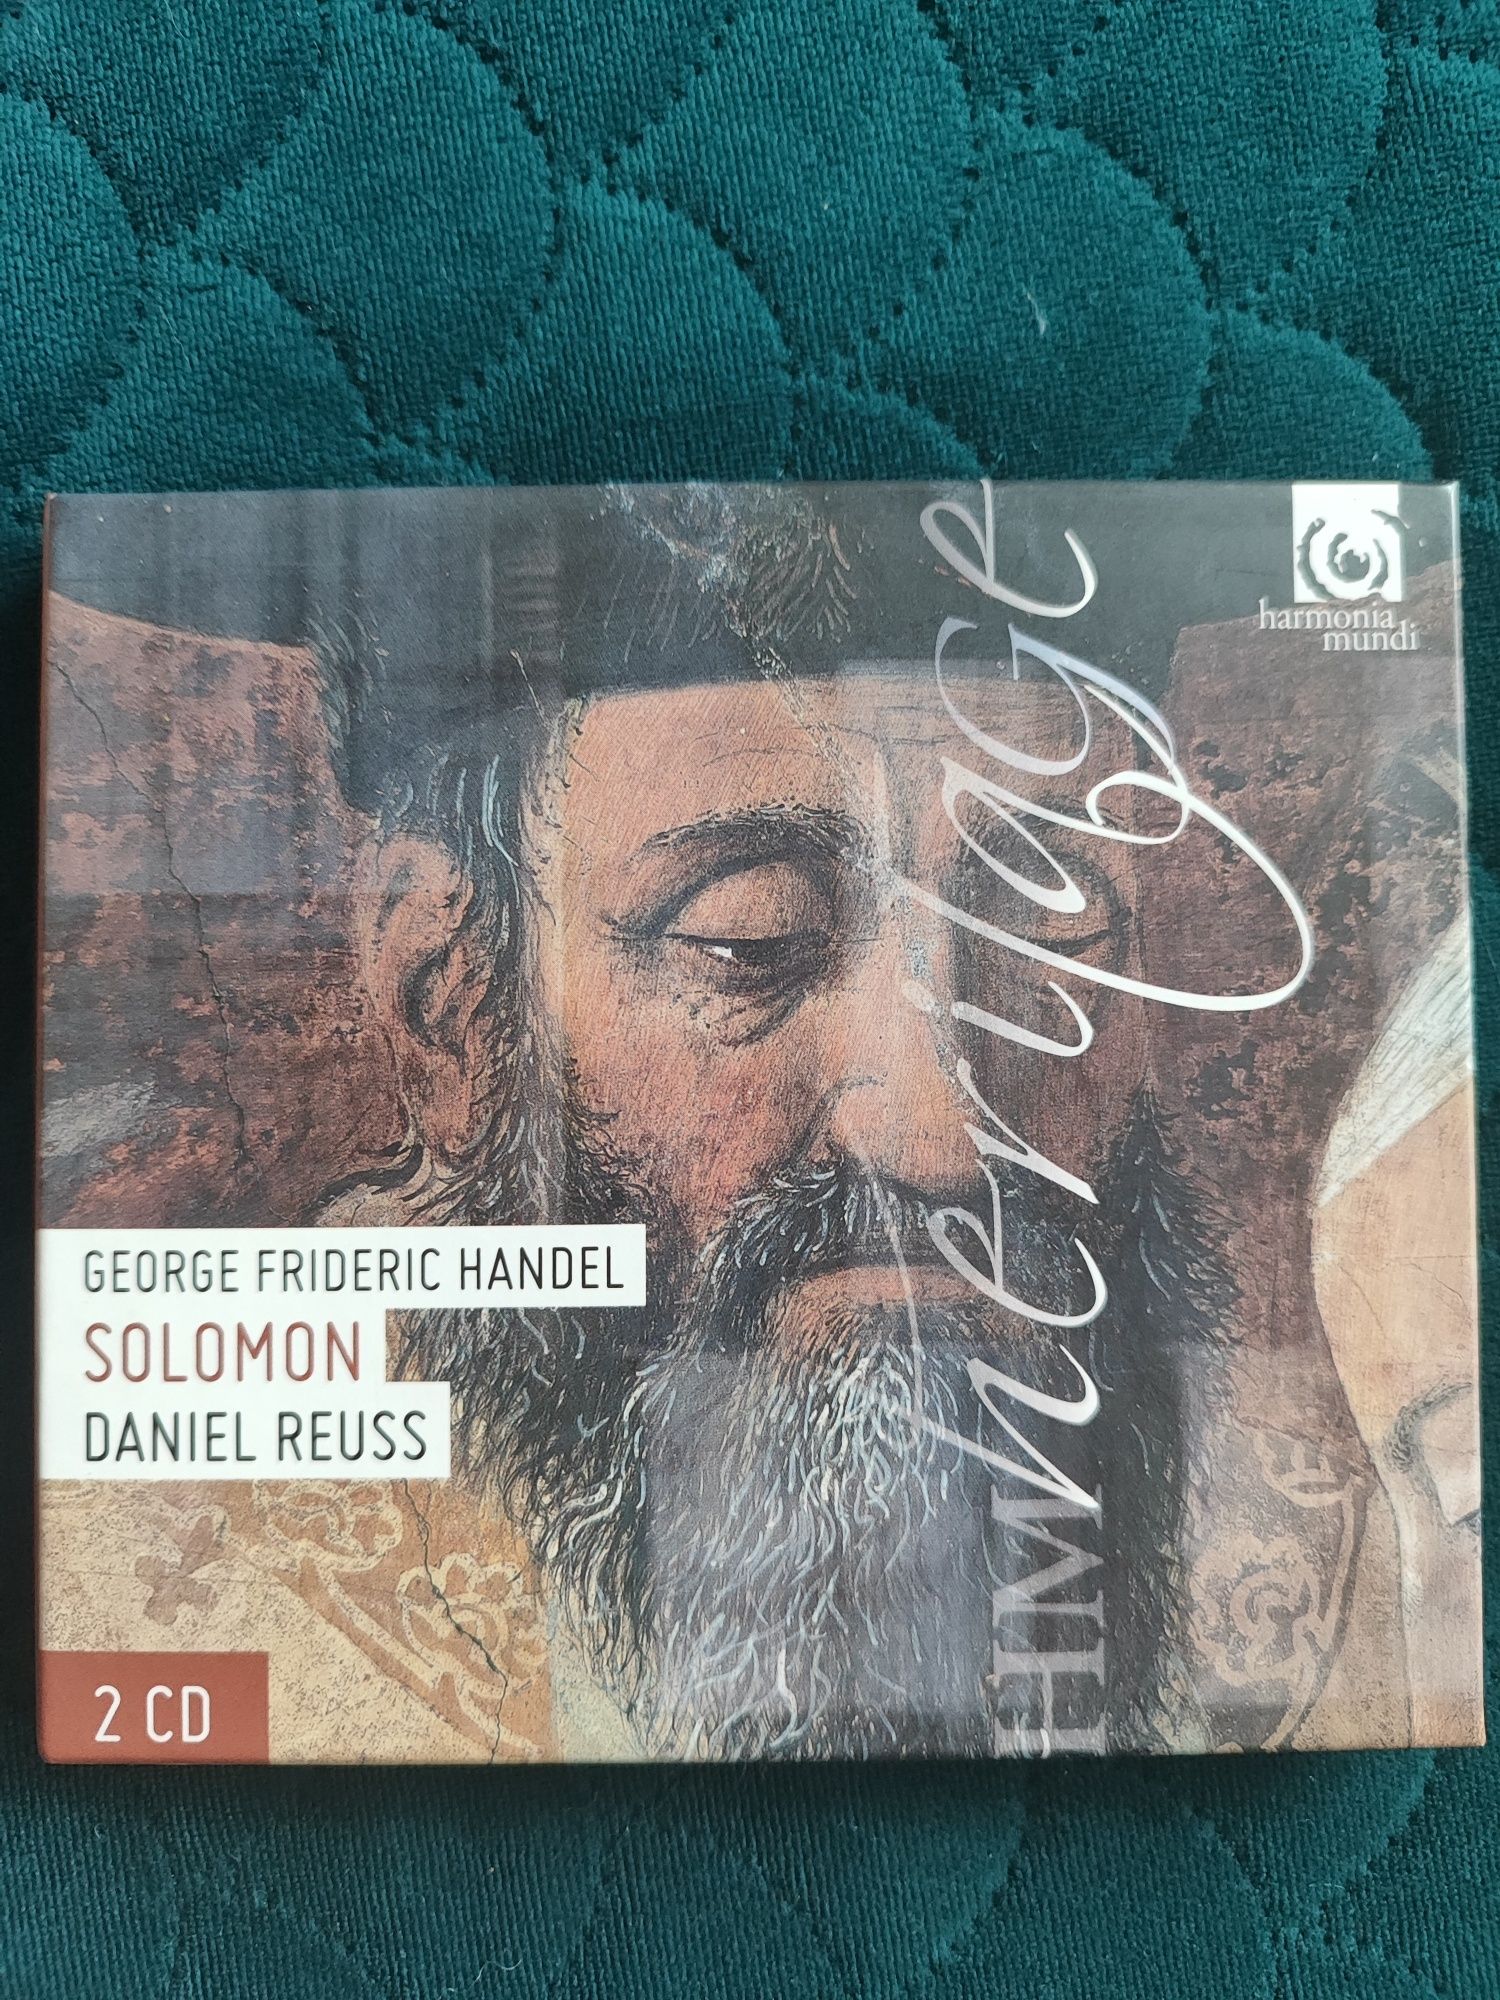 George Frideric Handel Solomon